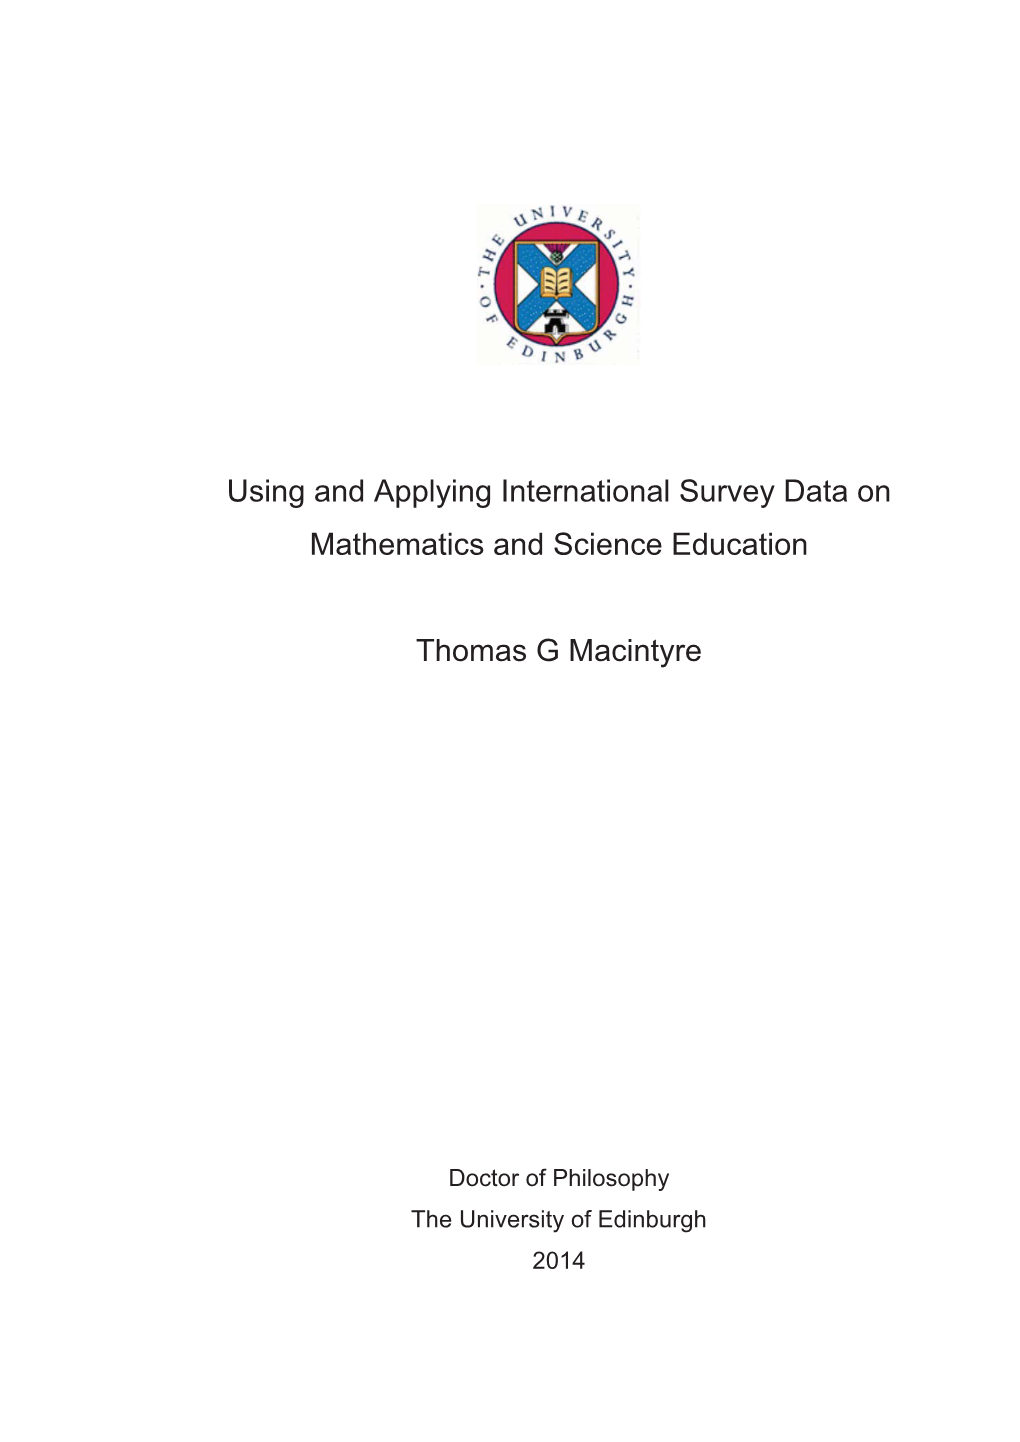 Using and Applying International Survey Data on Mathematics and Science Education  Thomas G Macintyre         